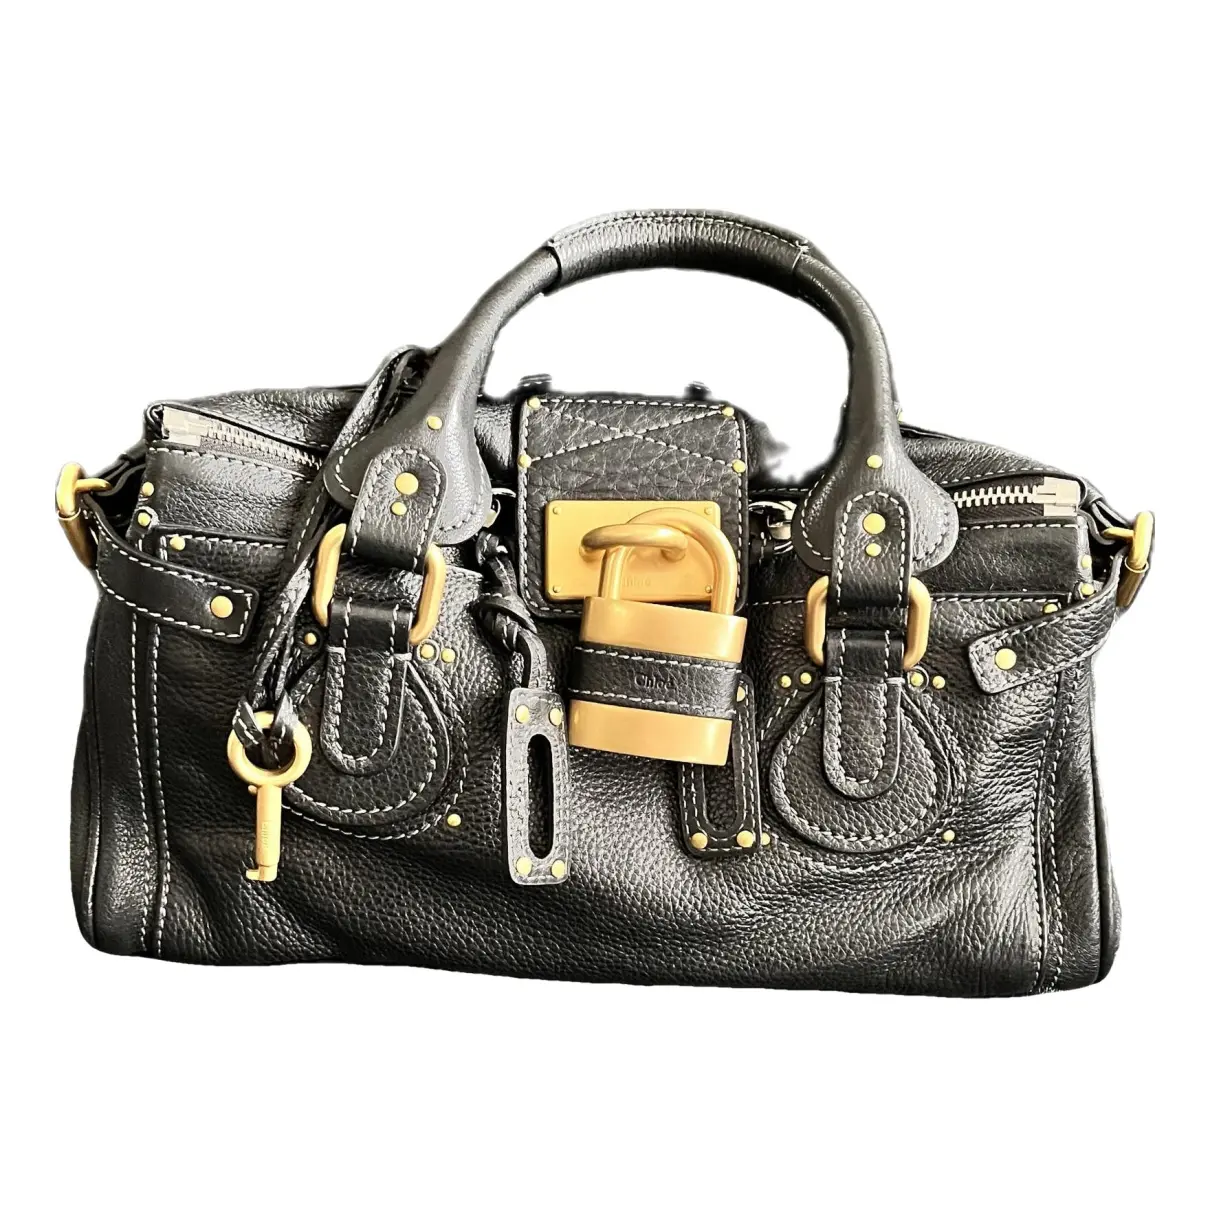 Buy Chloé Leather satchel online